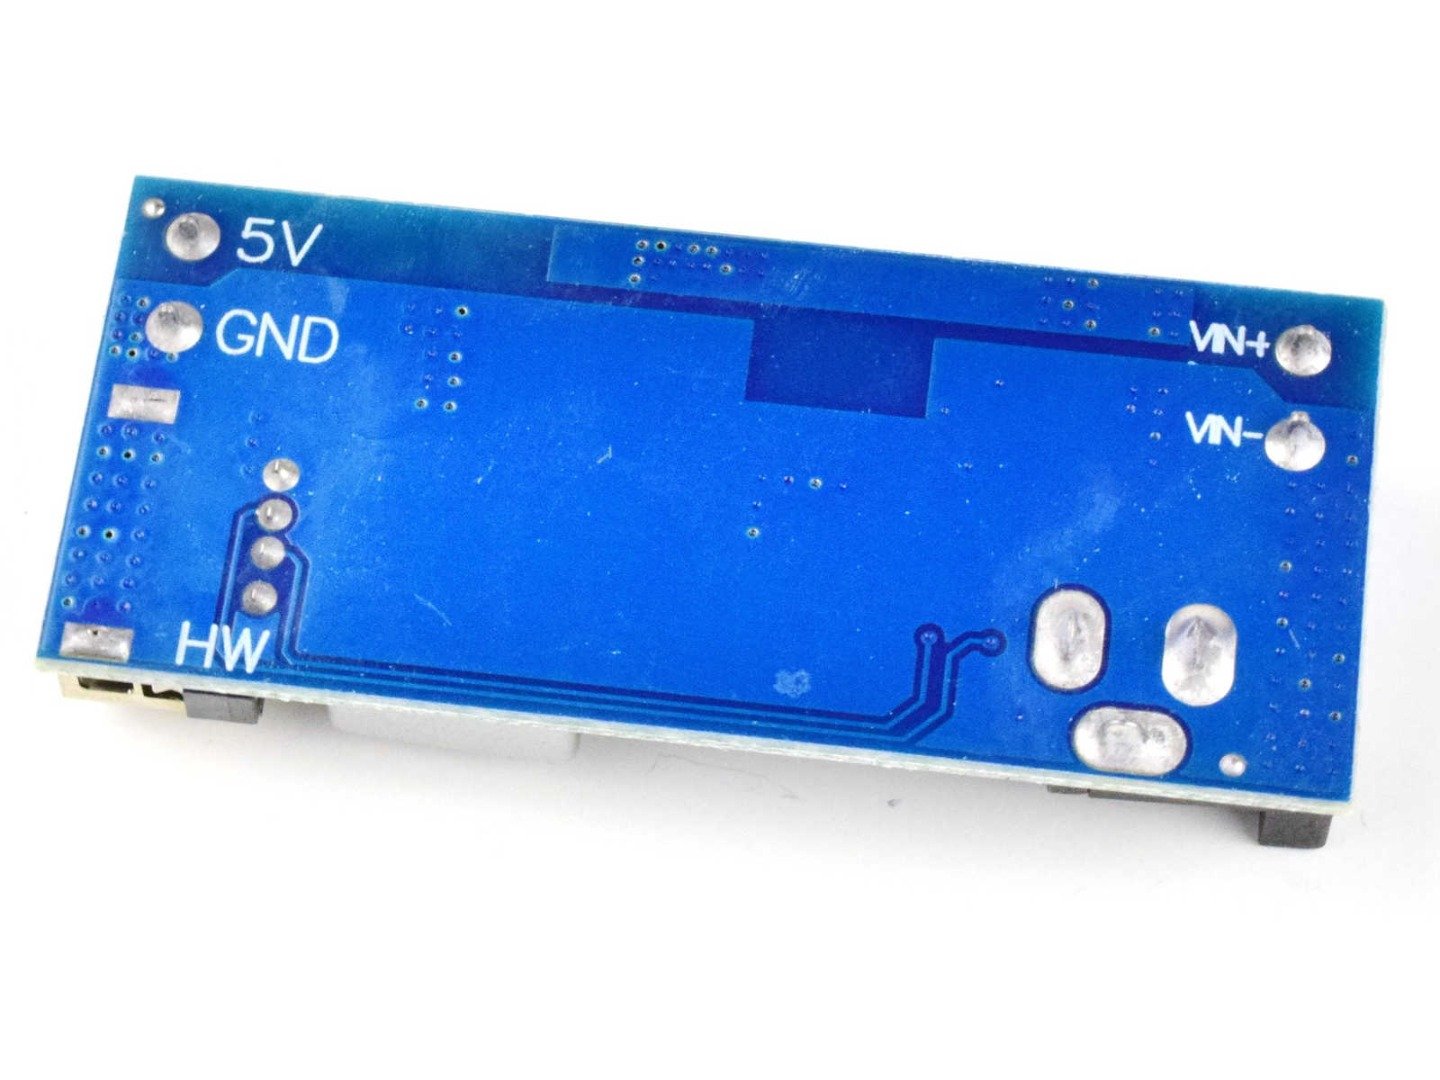 DC-DC Converter 5V 5A Output from 9-36V Input – Screw Terminals and USB Output 5